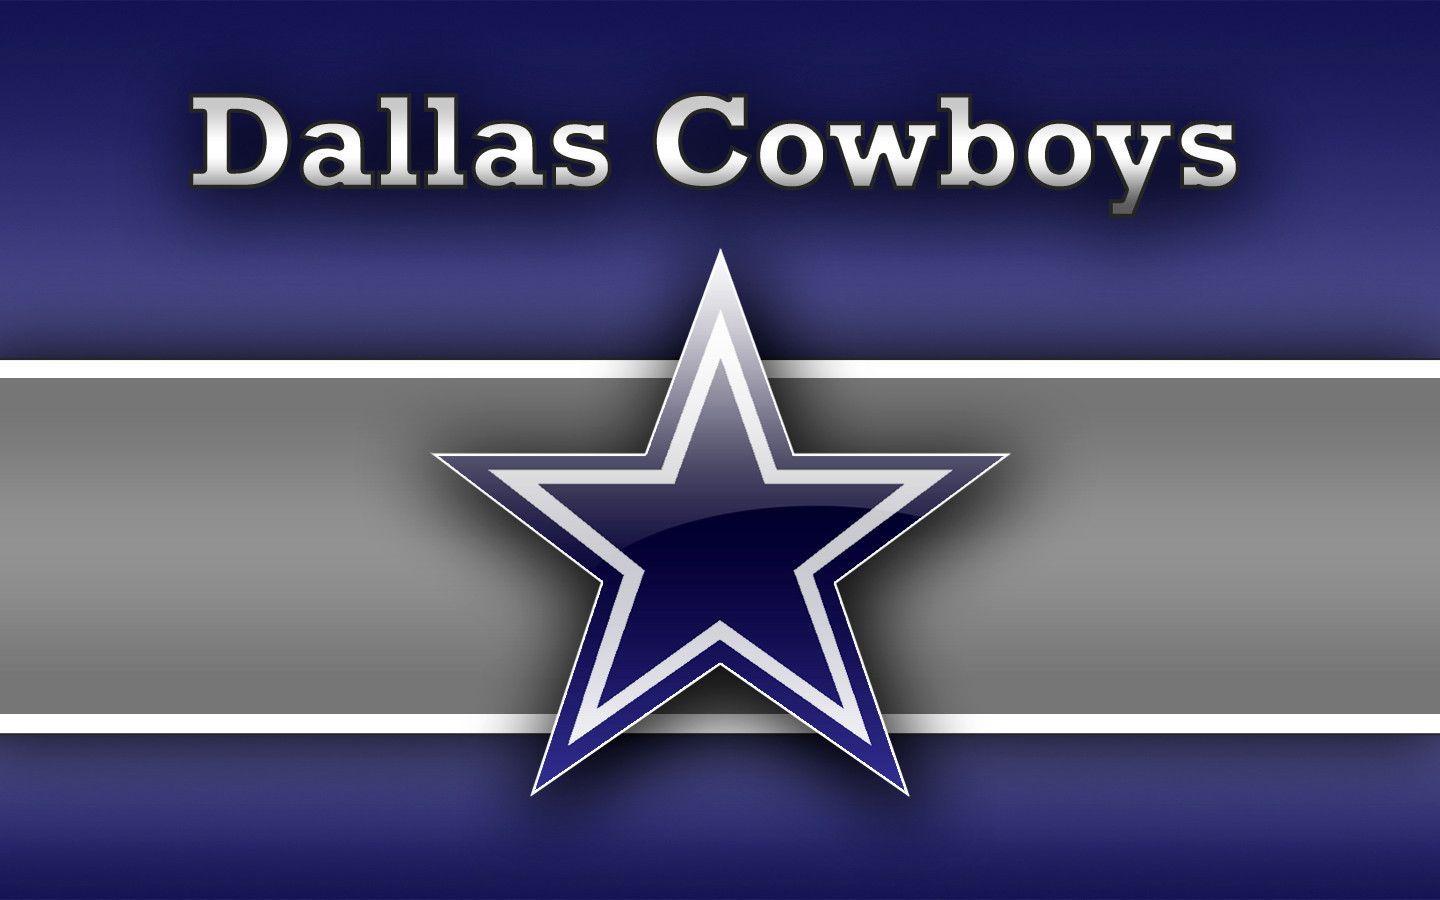 Dallas Cowboys Image Wallpapers Wallpaper Cave